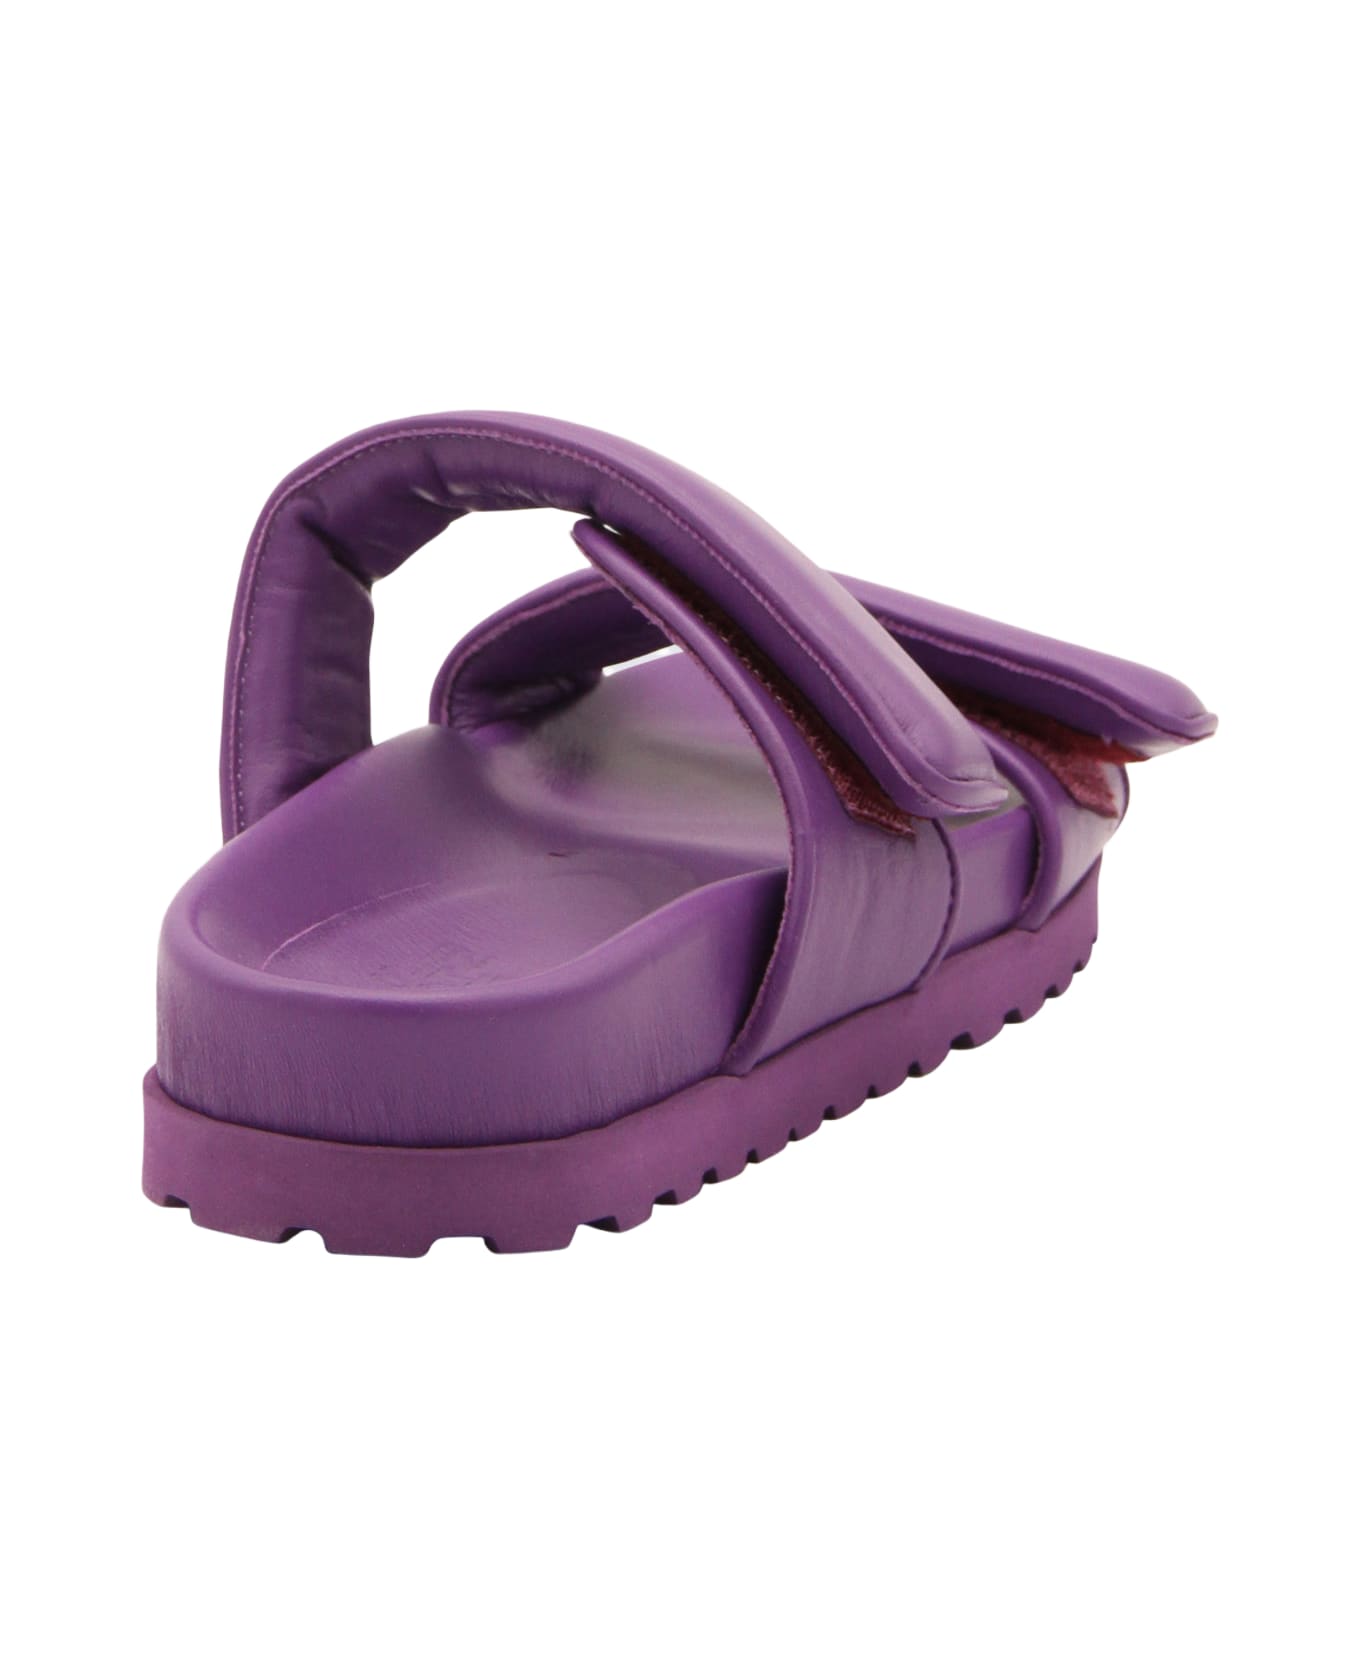 Gia X Pernille Teisbaek Purple Leather Sandals - Purple